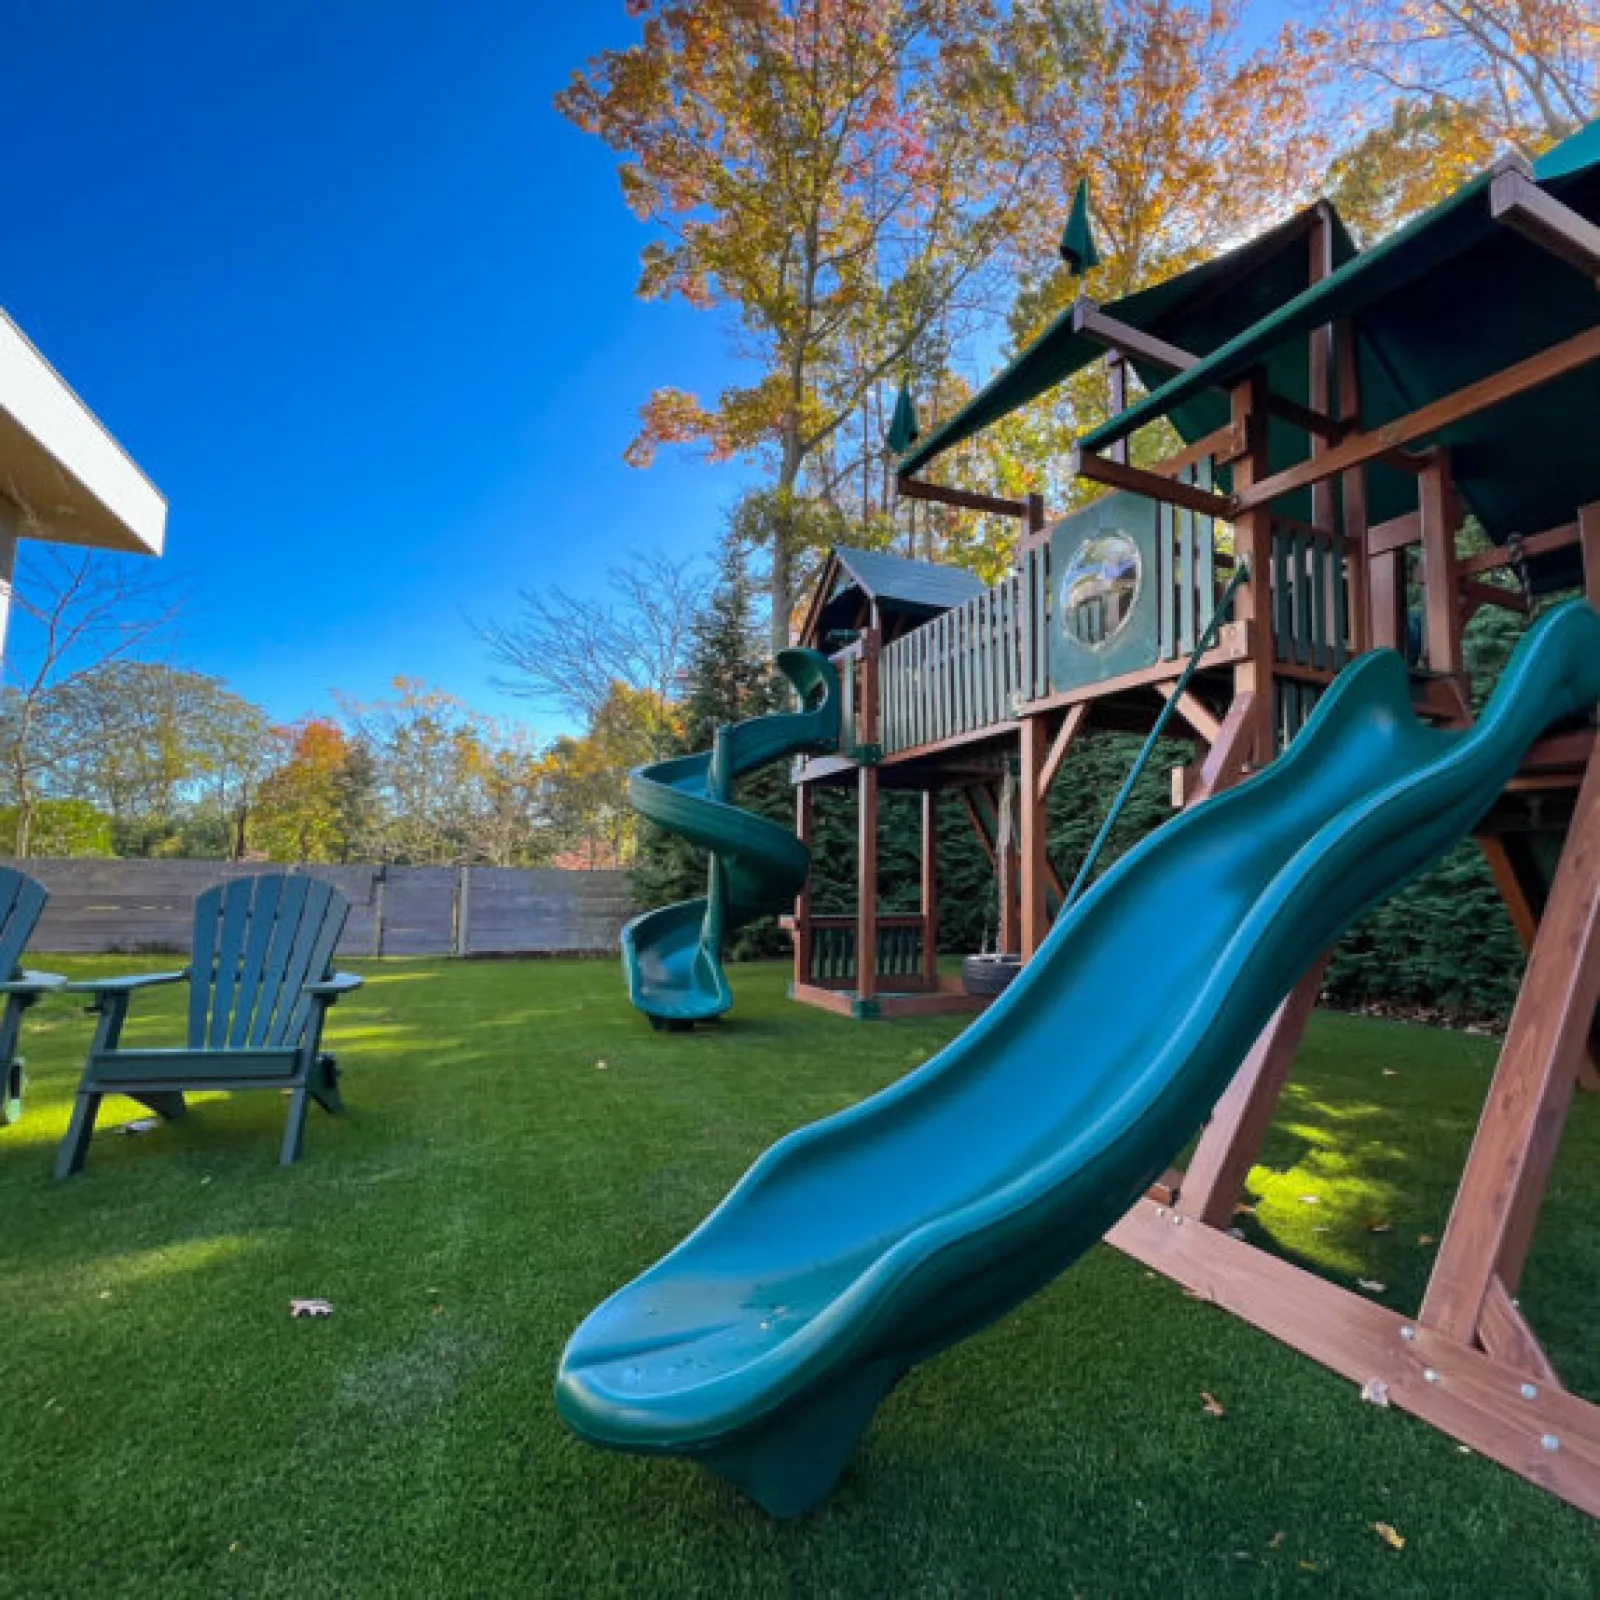 a blue slide in a yard